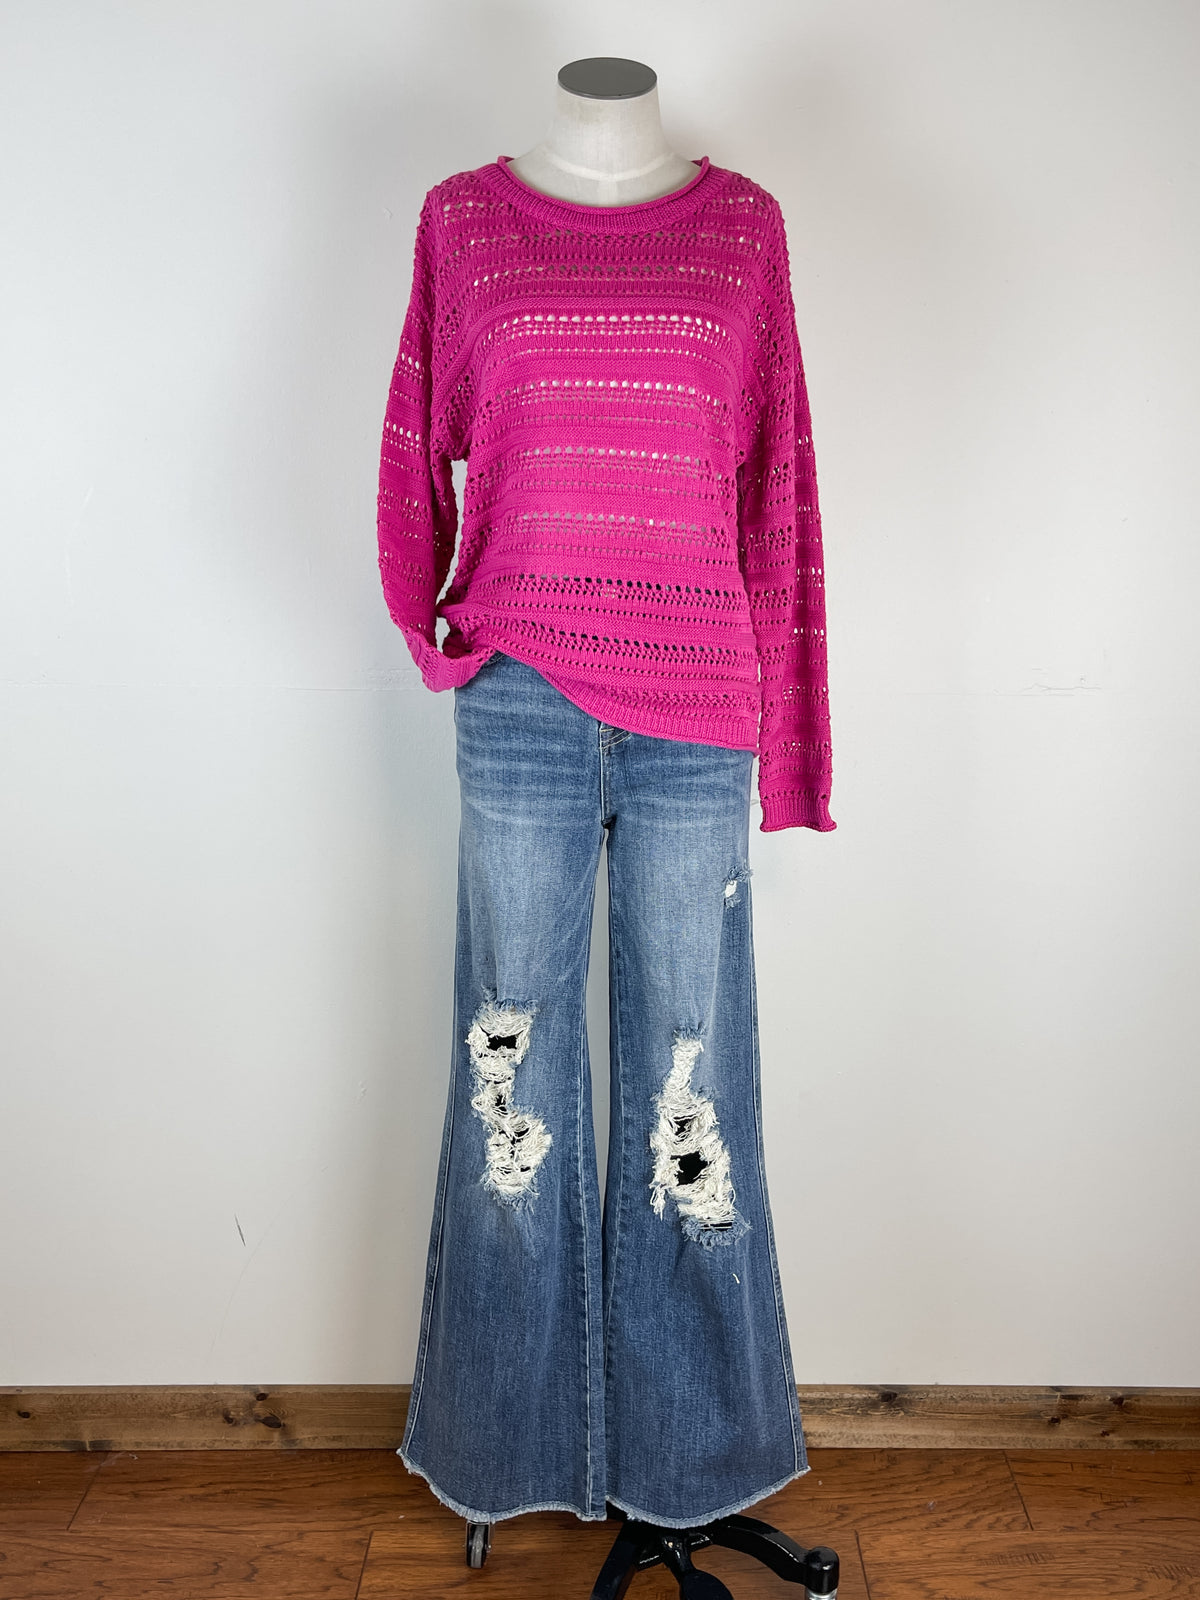 Kamila Crochet Sweater in Fuchsia